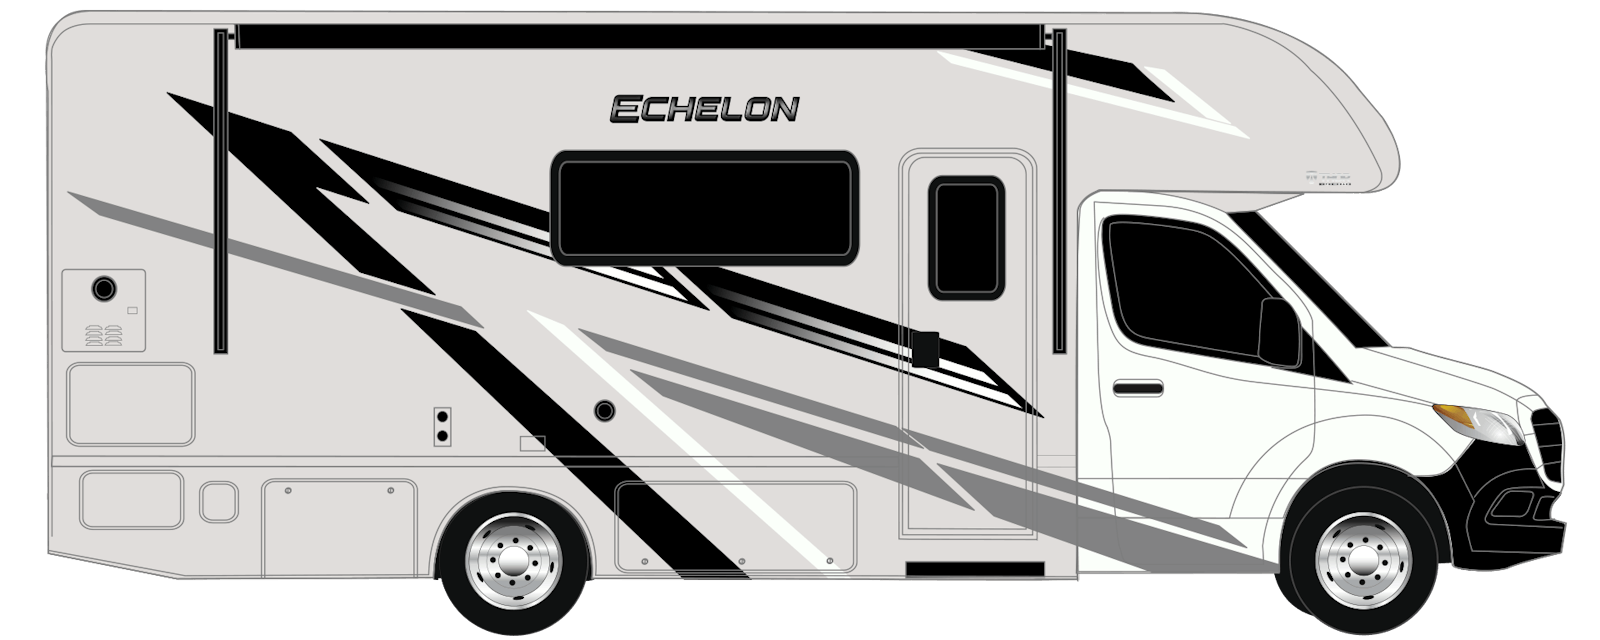 Echelon sprinter standard graphics